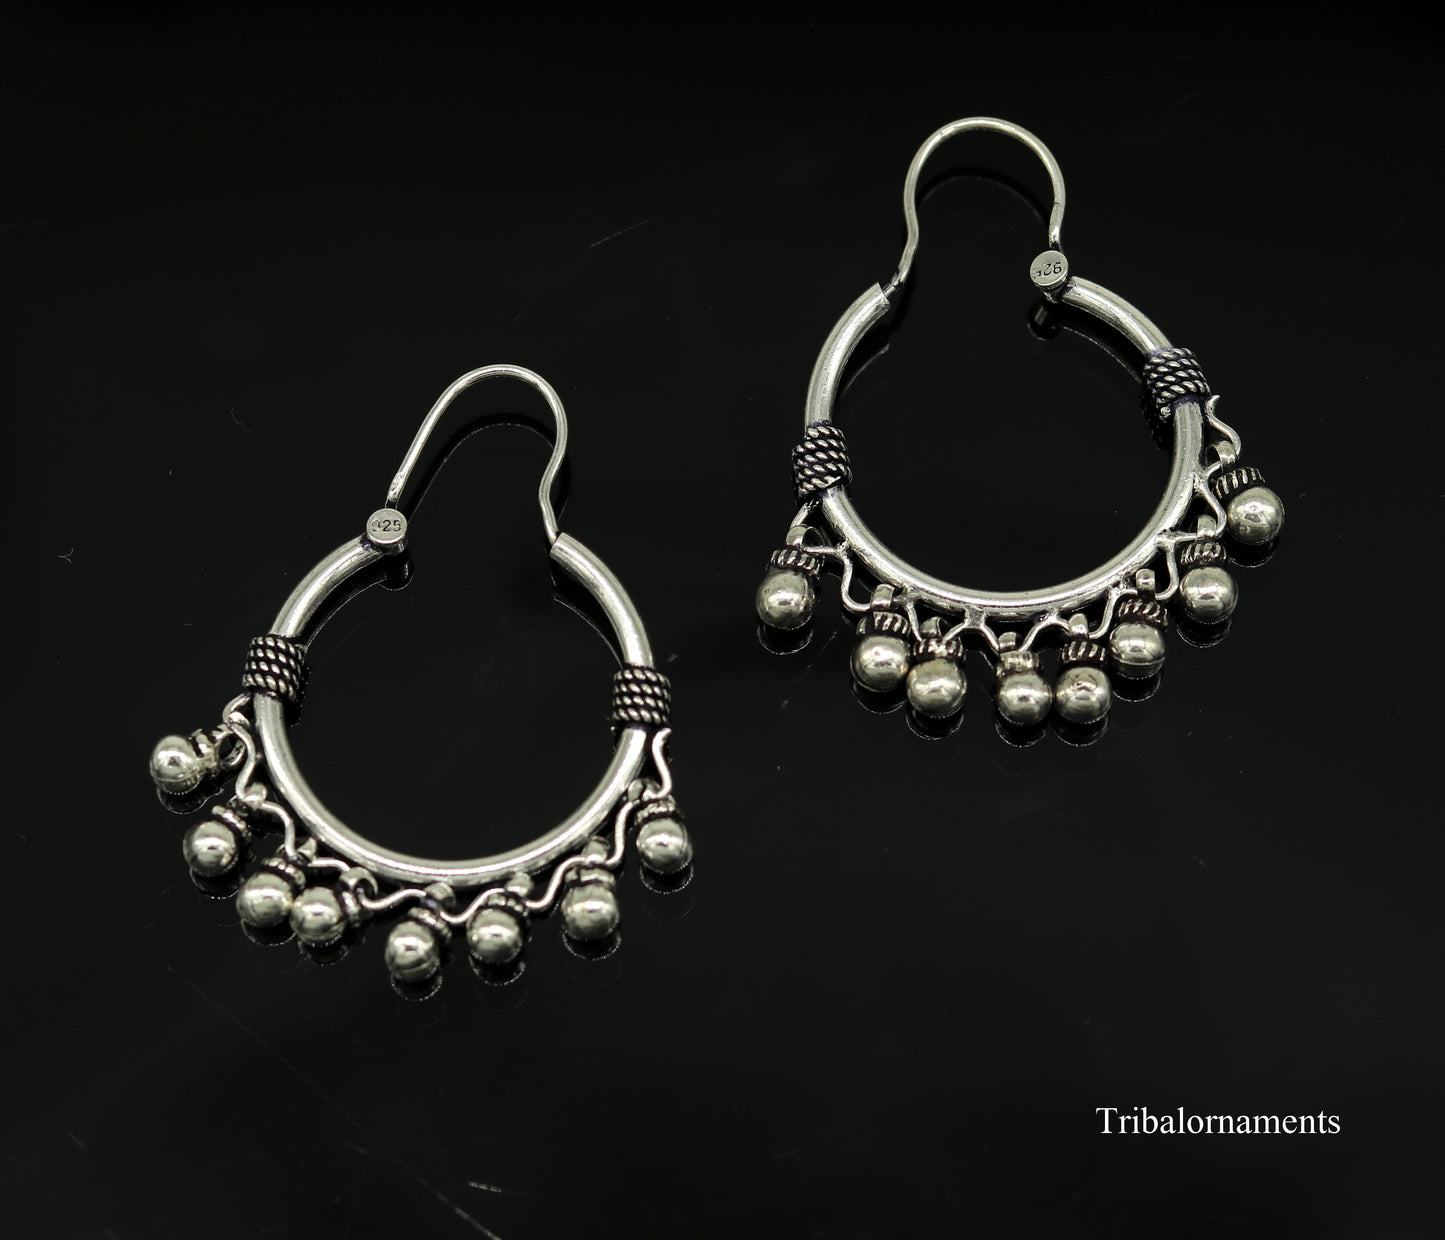 Vintage antique design handmade 925 sterling silver gorgeous hoops boho earrings bali with hanging drop bells tribal Banjara jewelry s897 - TRIBAL ORNAMENTS